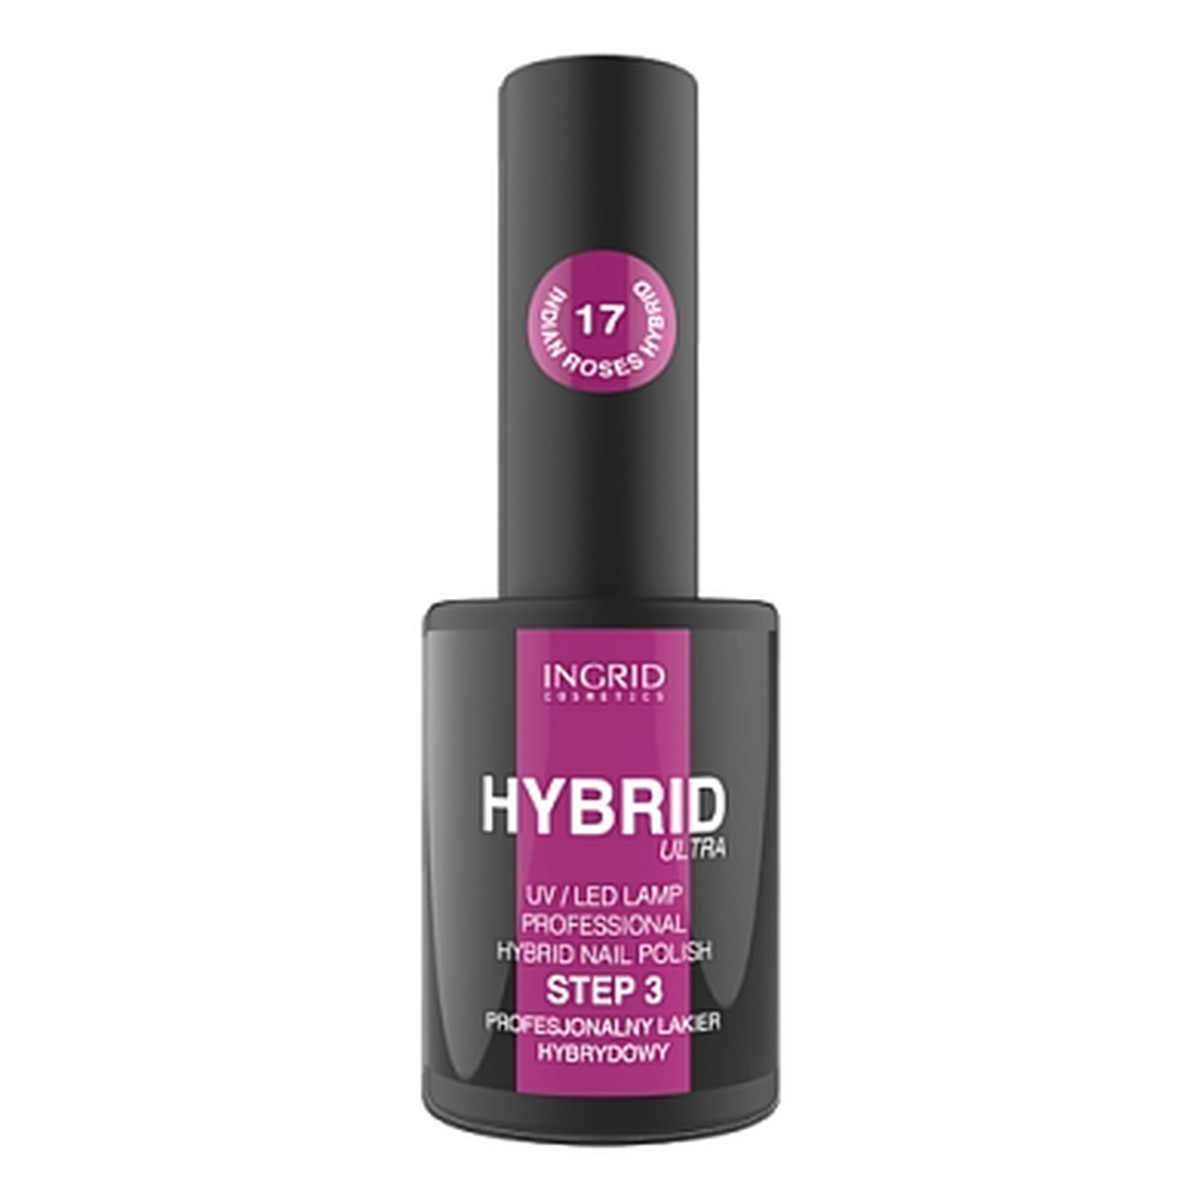 Ingrid Hybrid Ultra lakier hybrydowy do paznokci 7ml